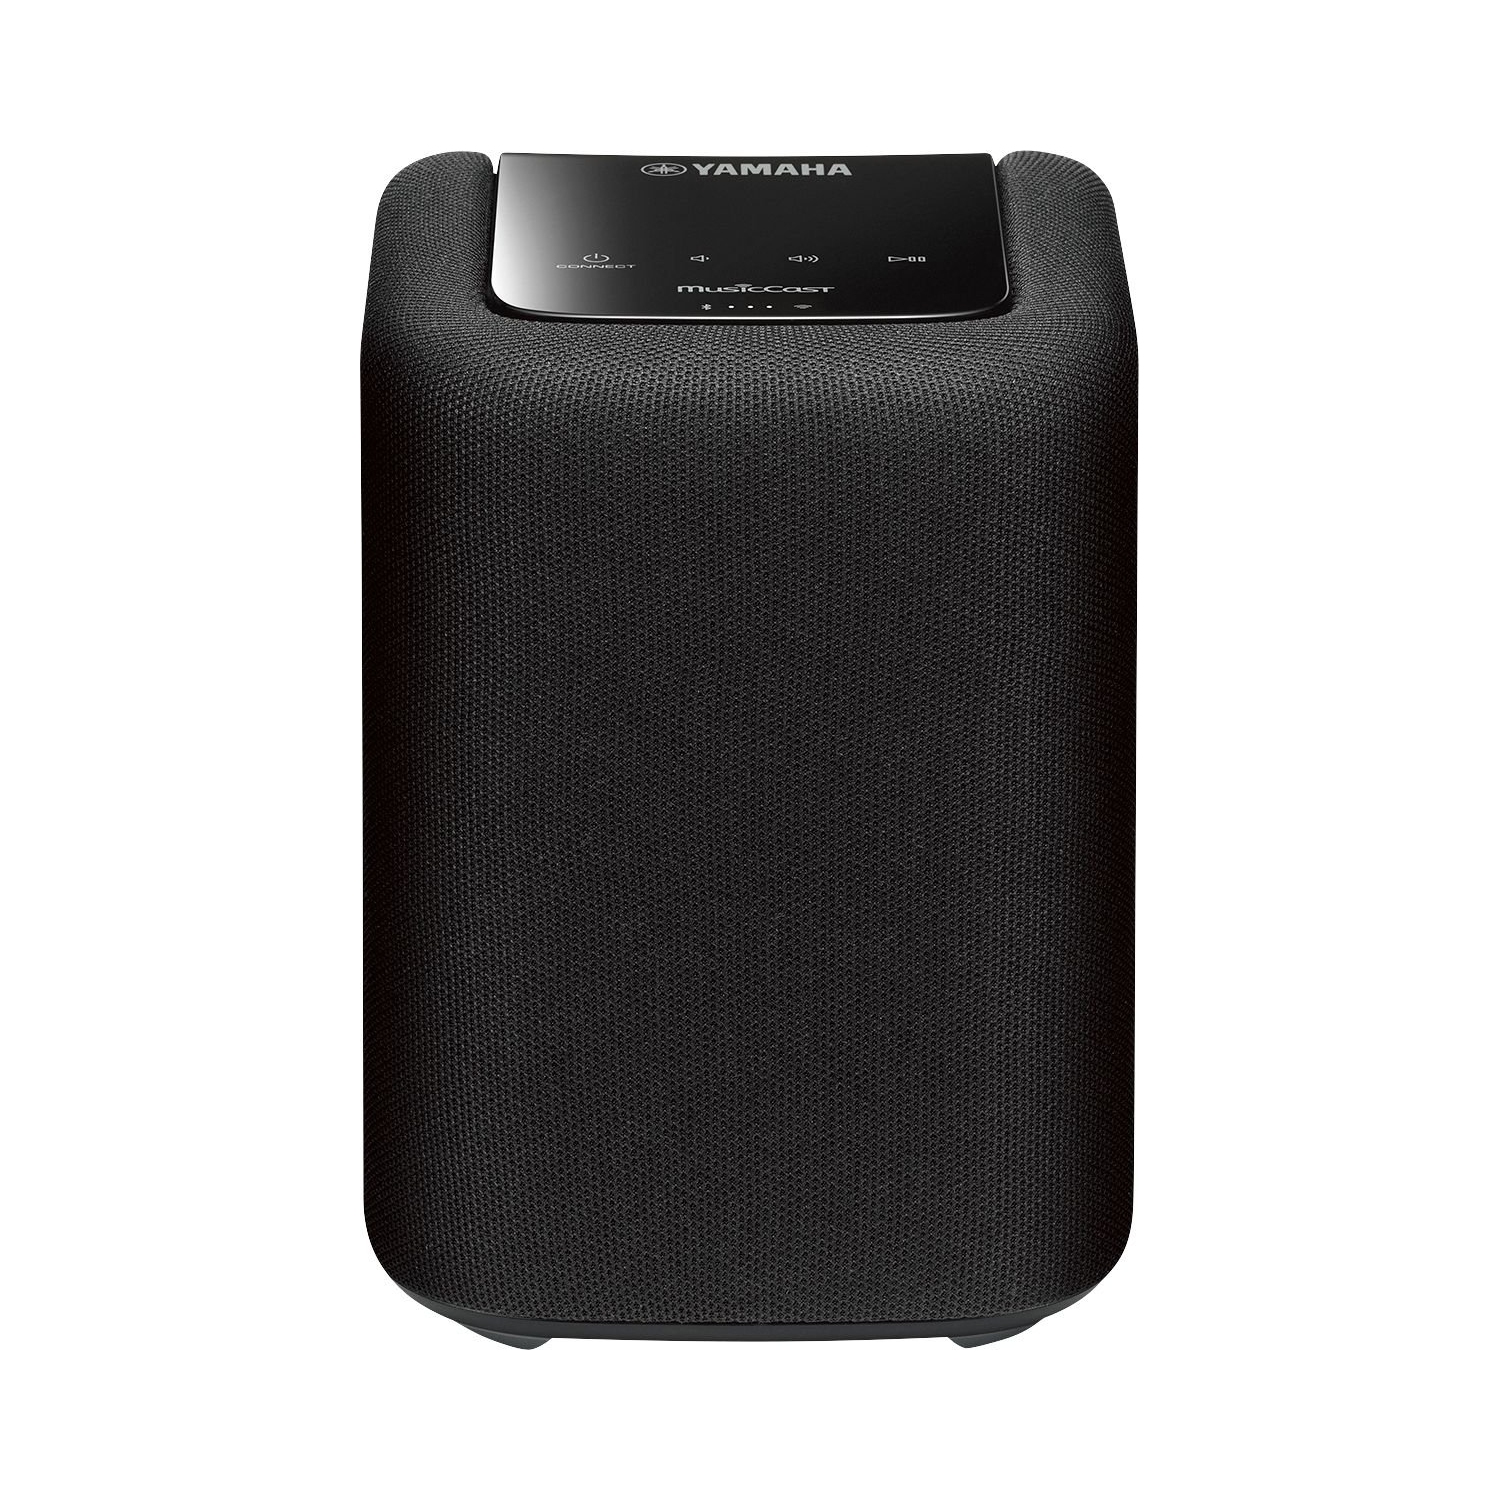 Yamaha Wireless Speaker for Streaming Music - Black (WX-010)